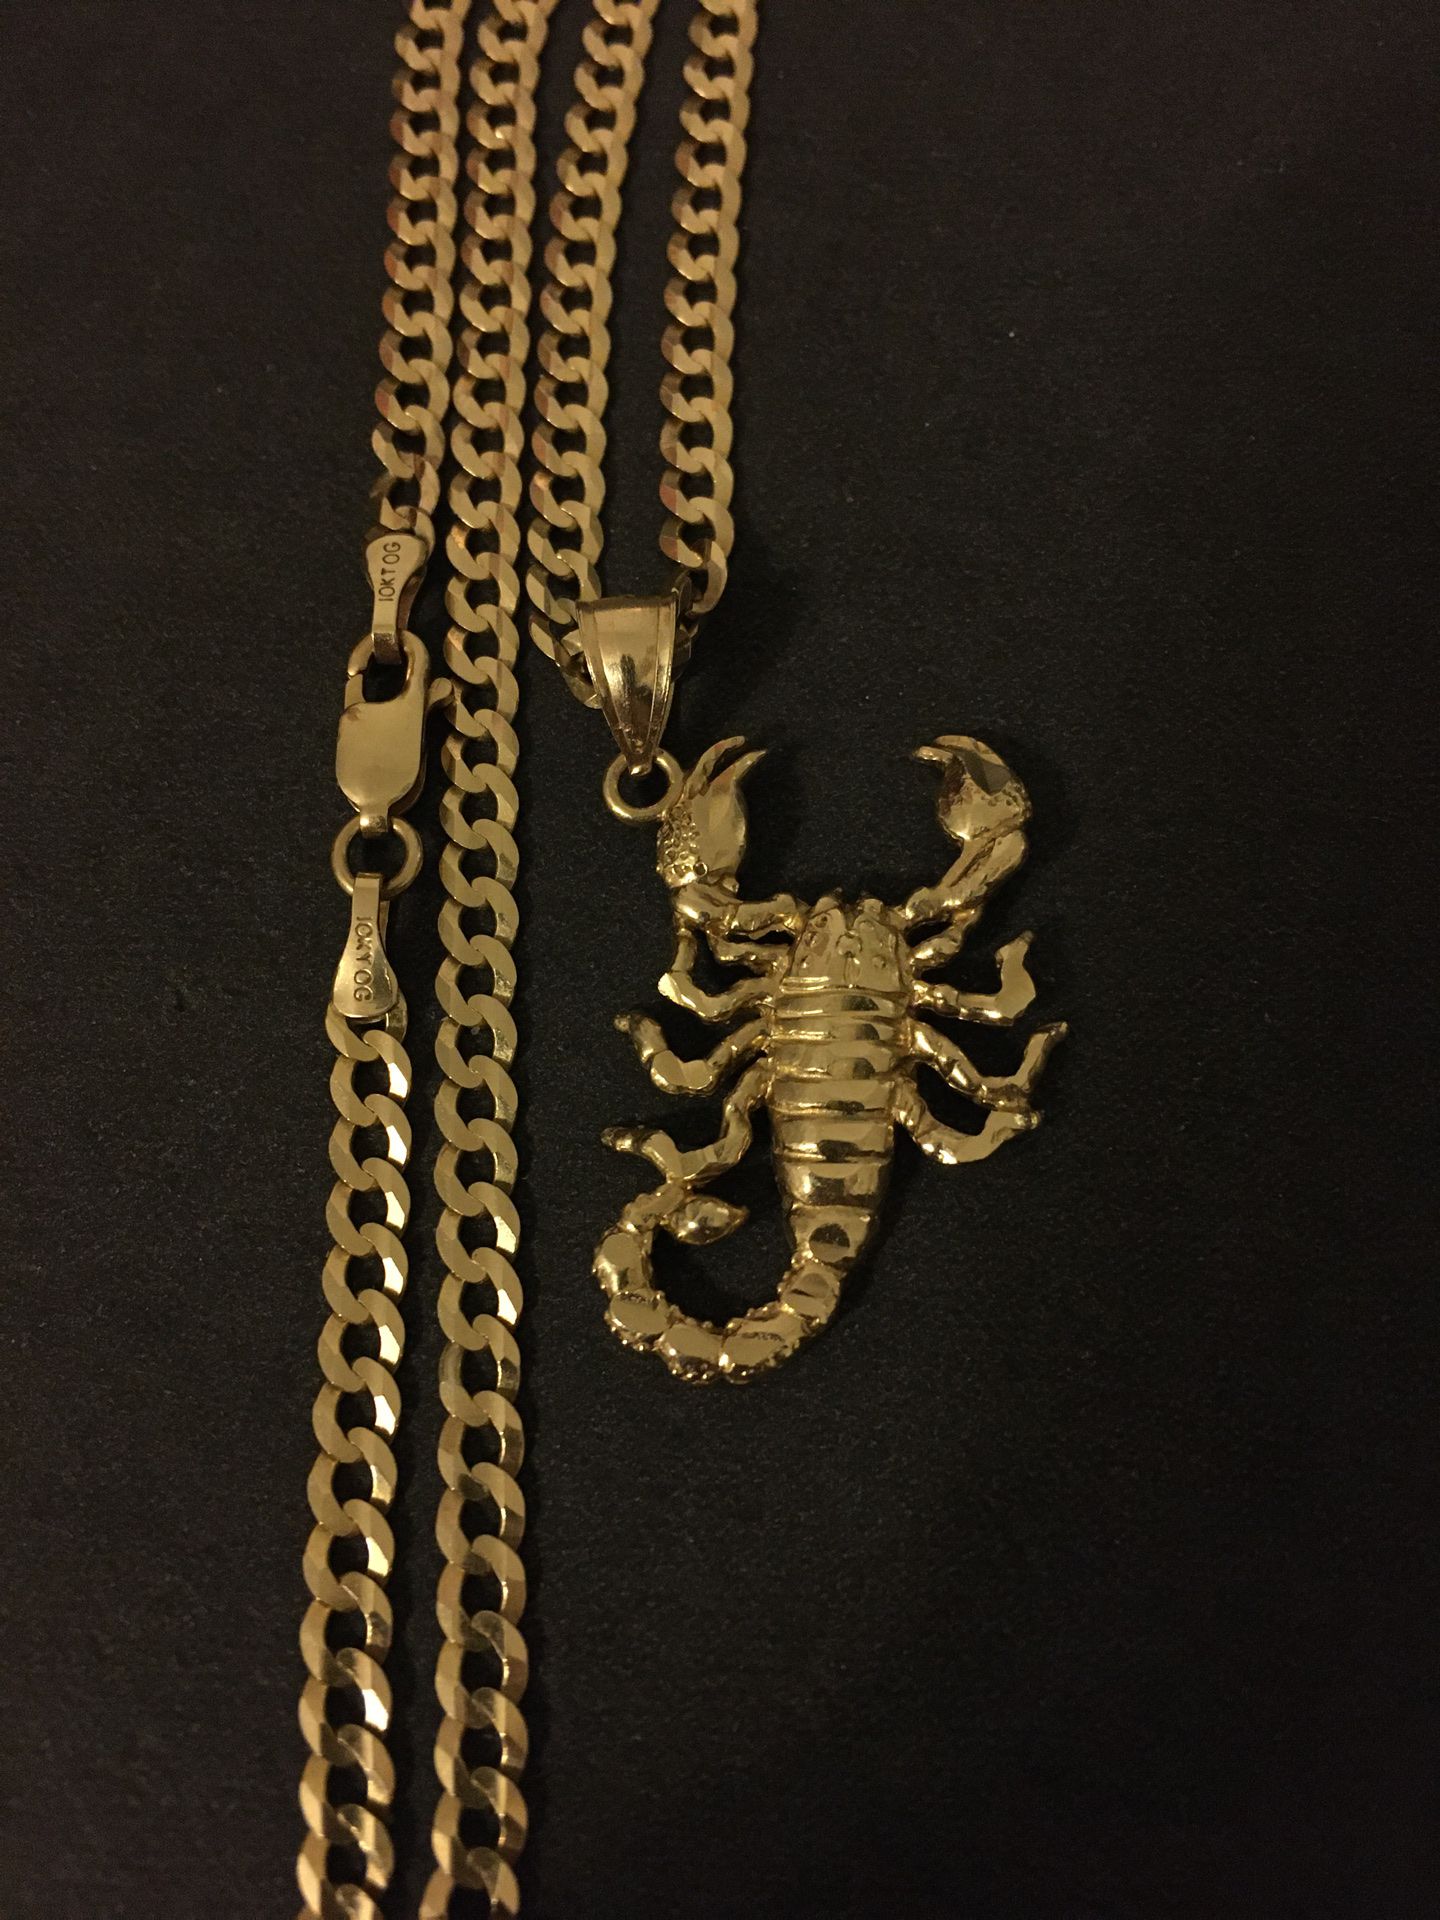 10k gold Cuban link Chan and scorpion pendant